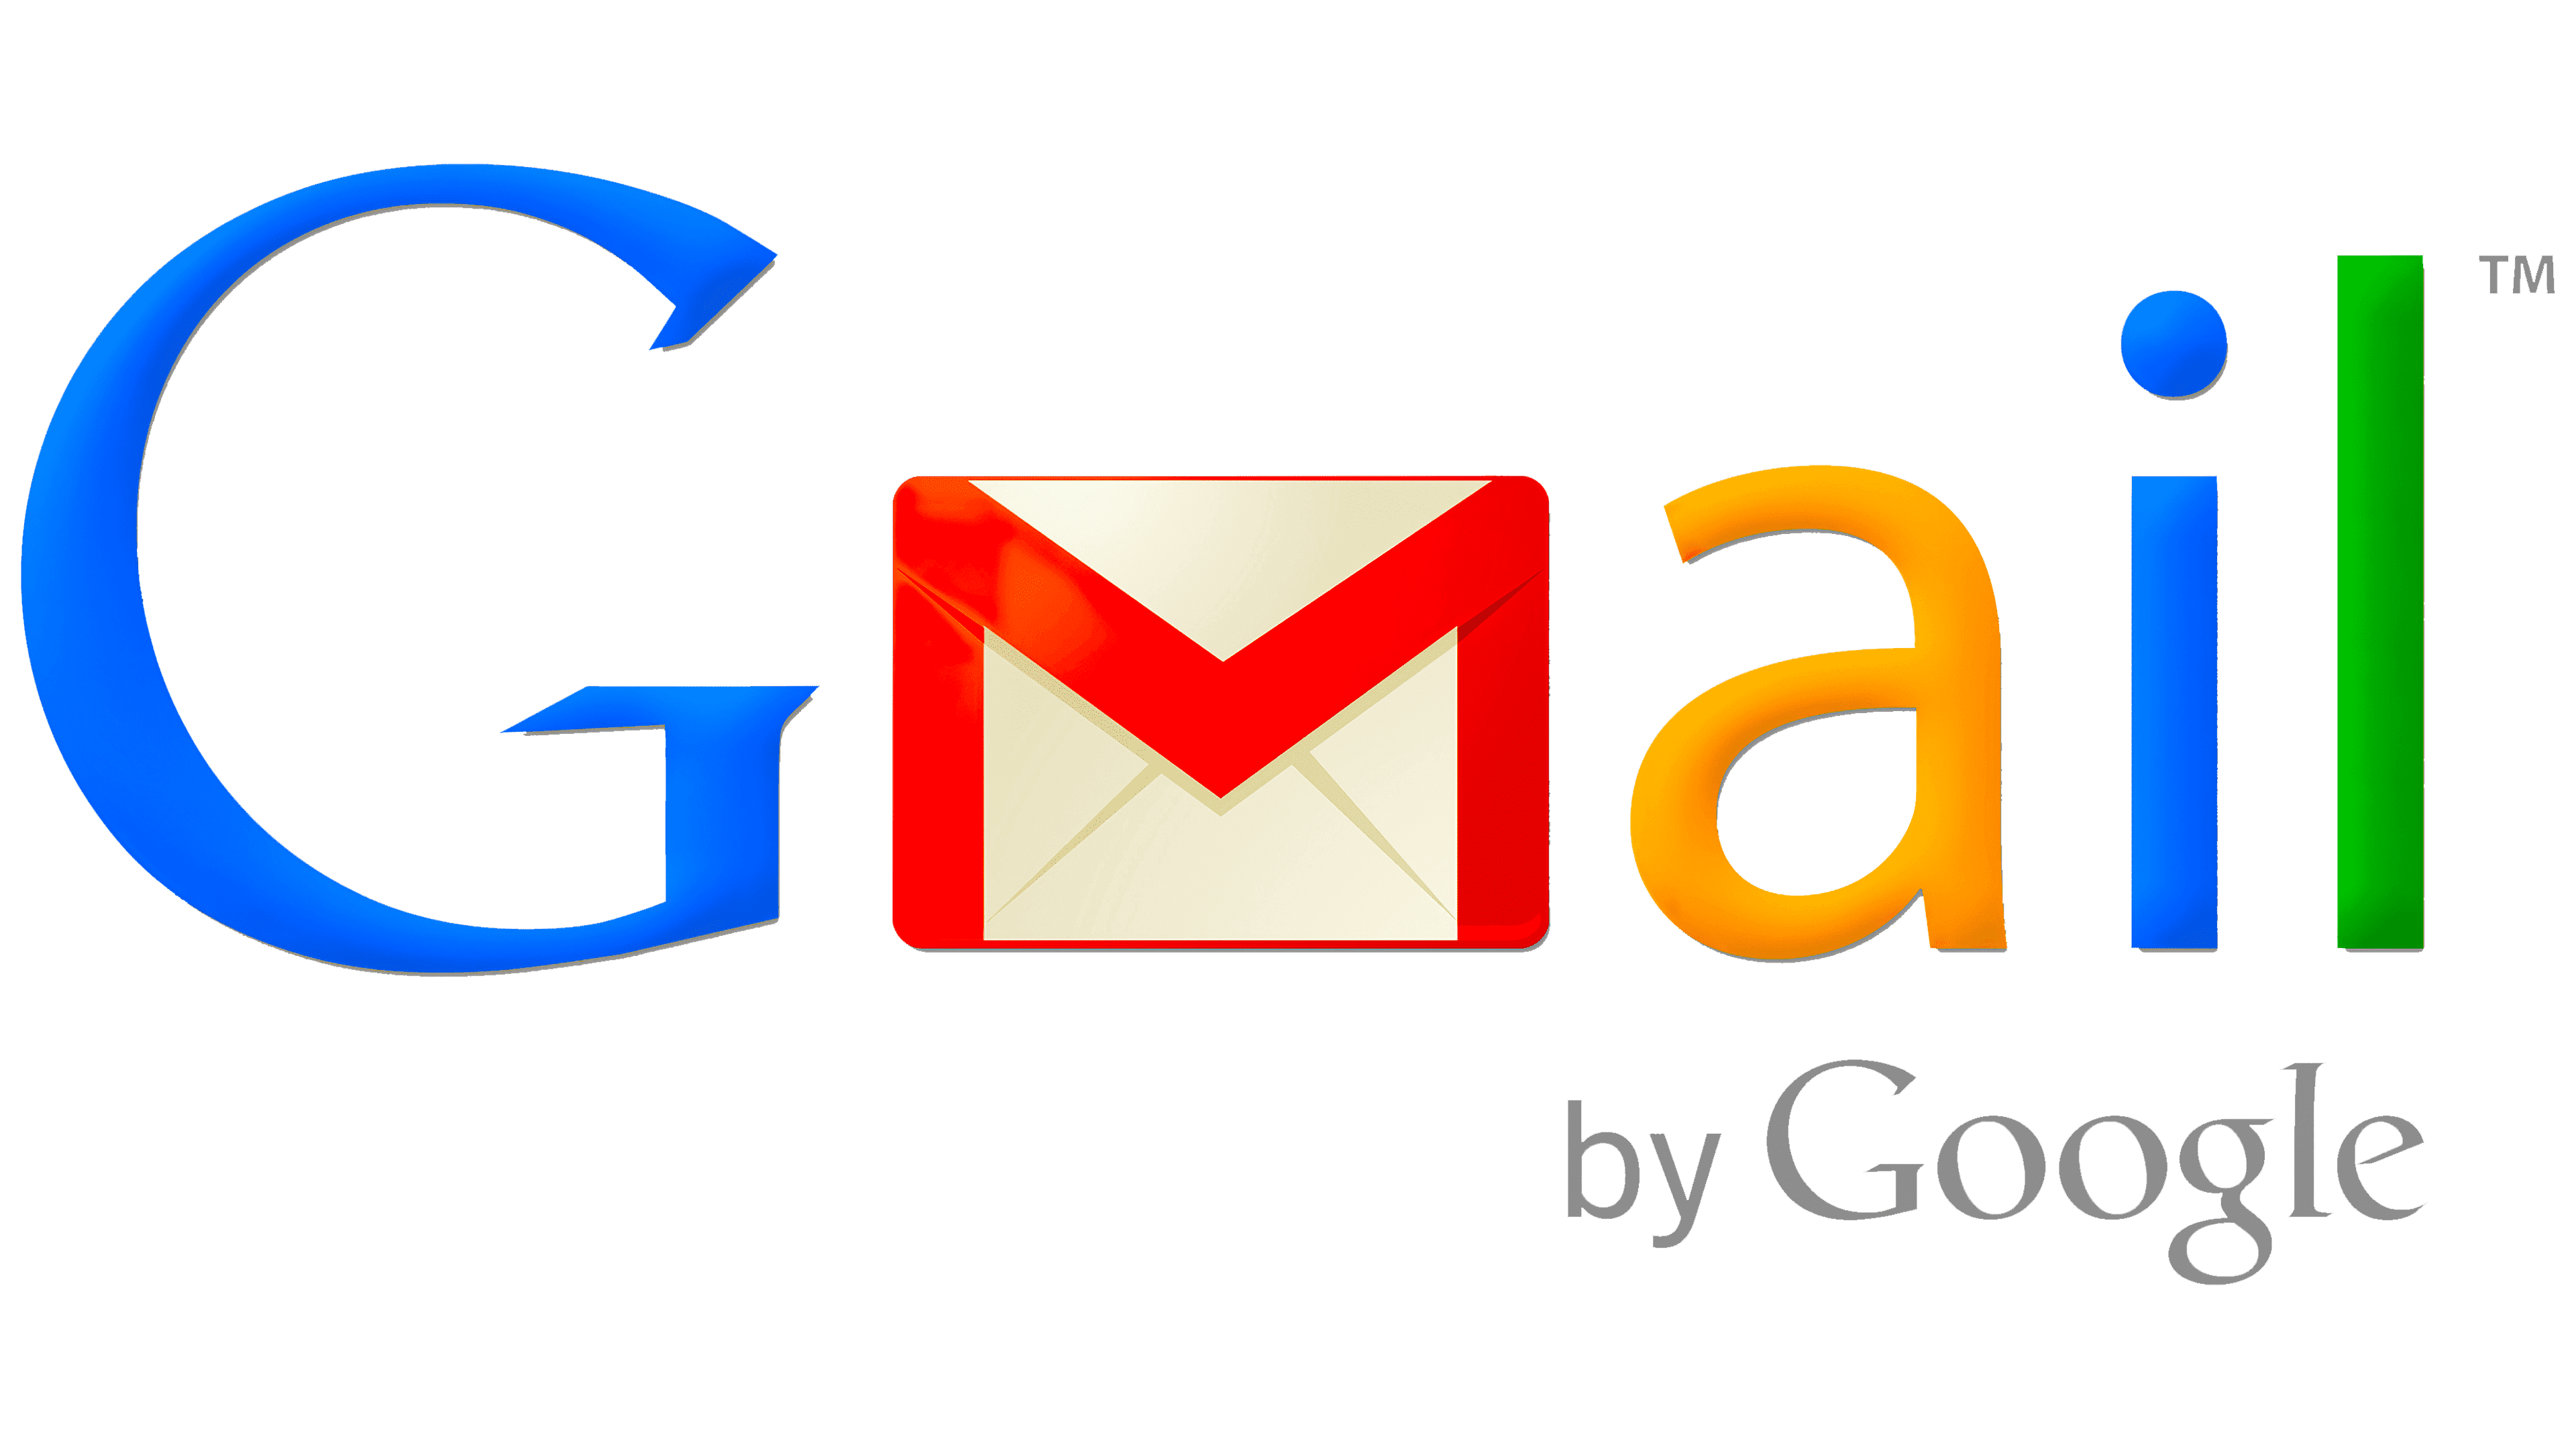 16 gmail com. Гмаил. Гугл почта. Gmail картинка. Гугл почта картинка.